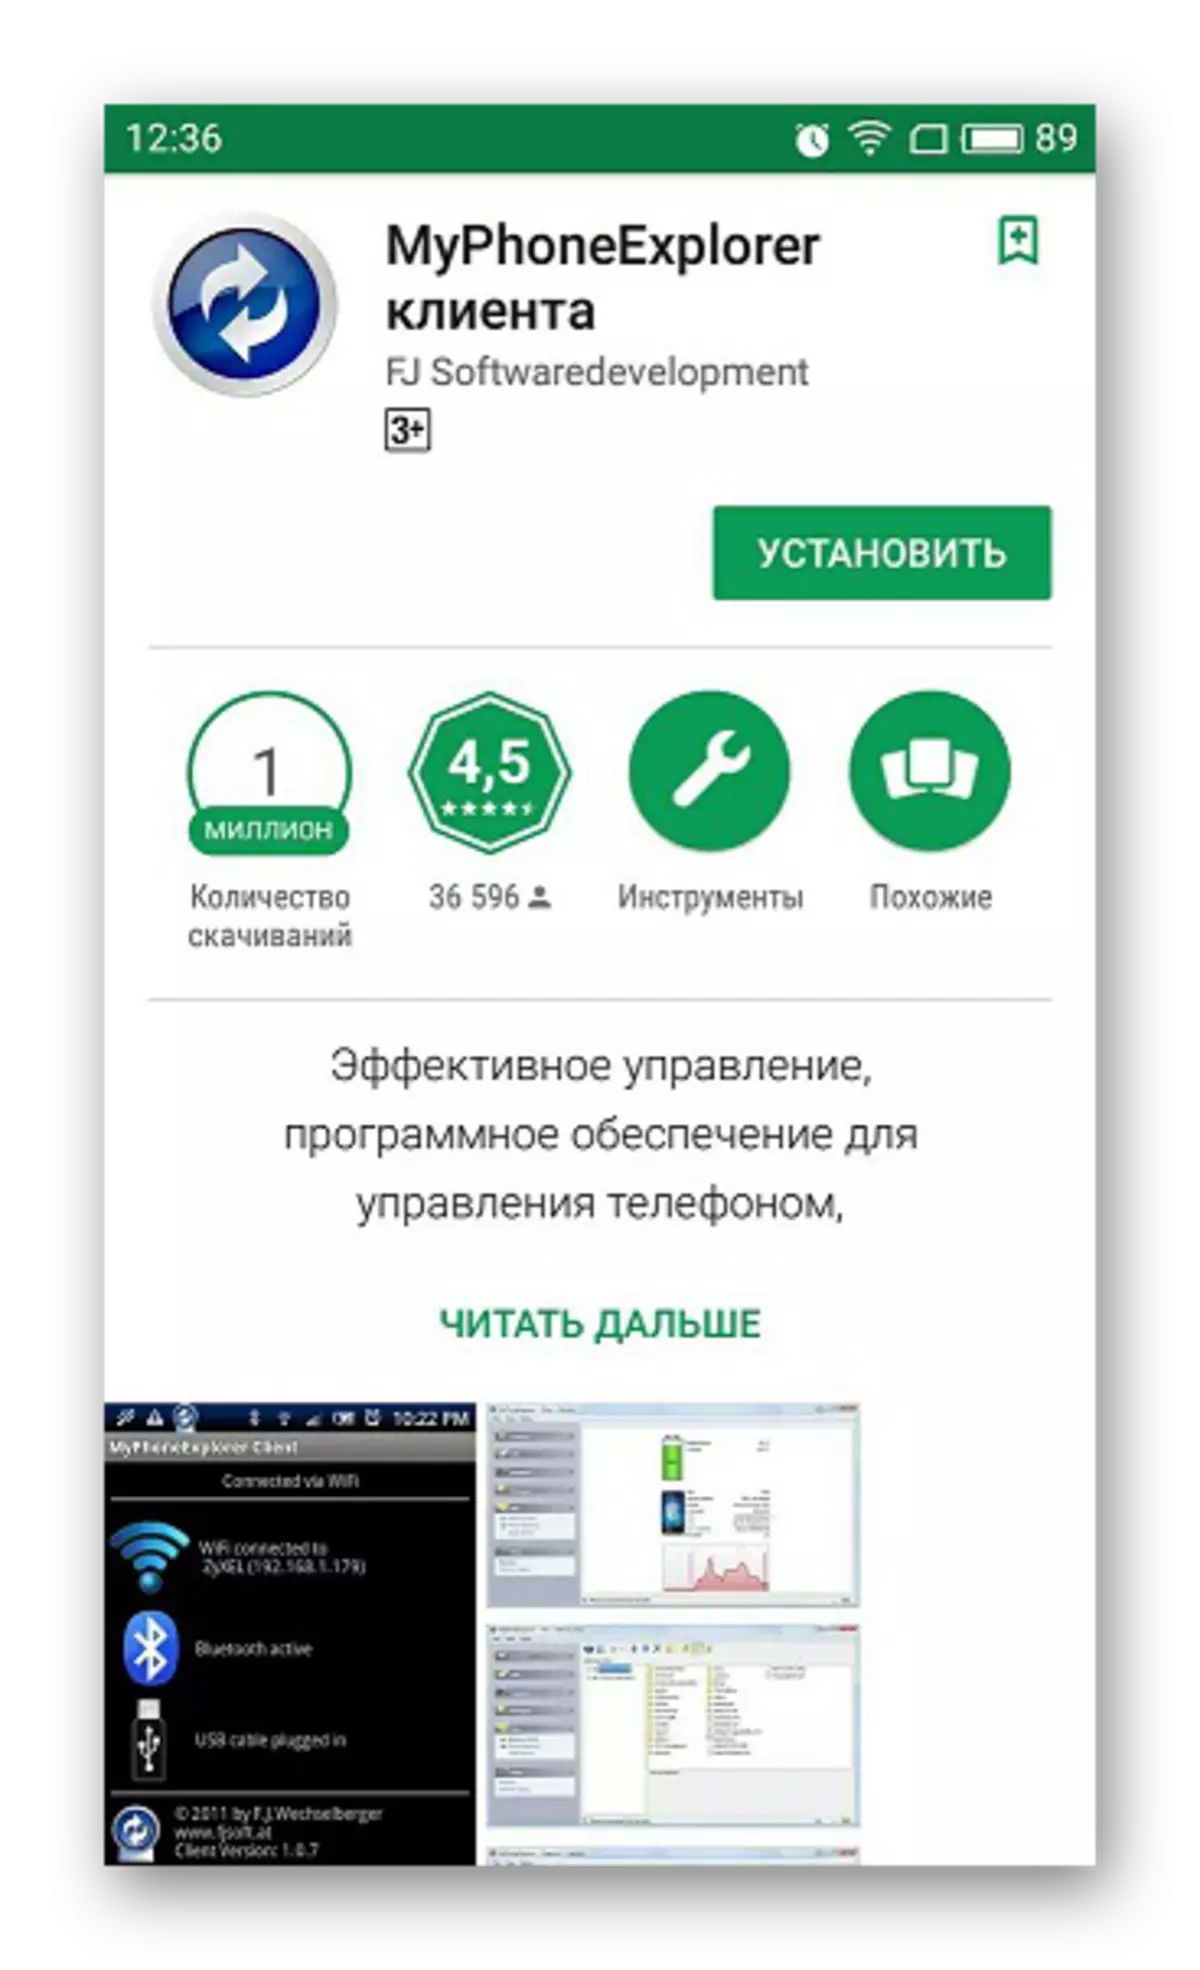 Tsitsani MyBophoneExplorer ya Android